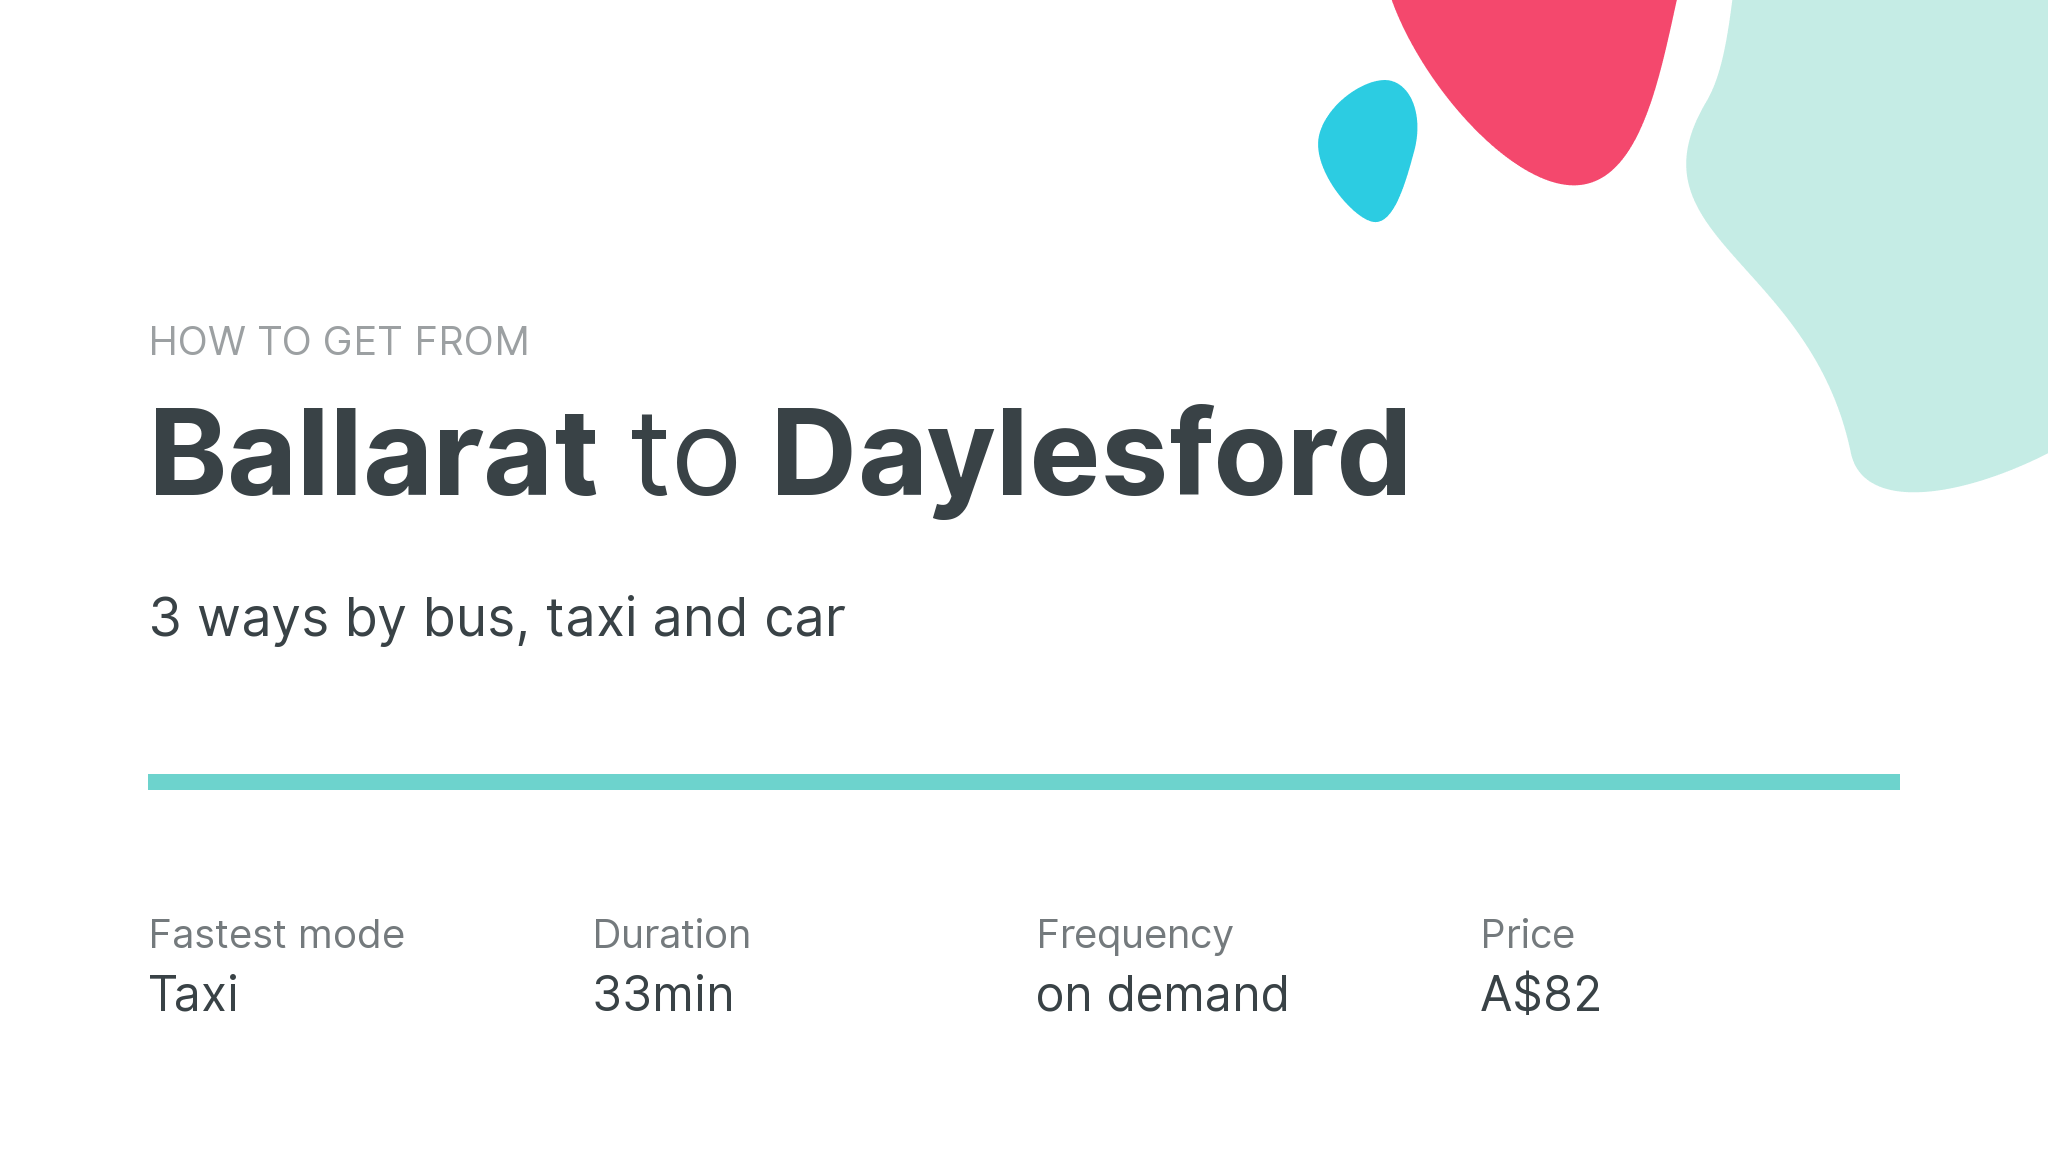 How do I get from Ballarat to Daylesford